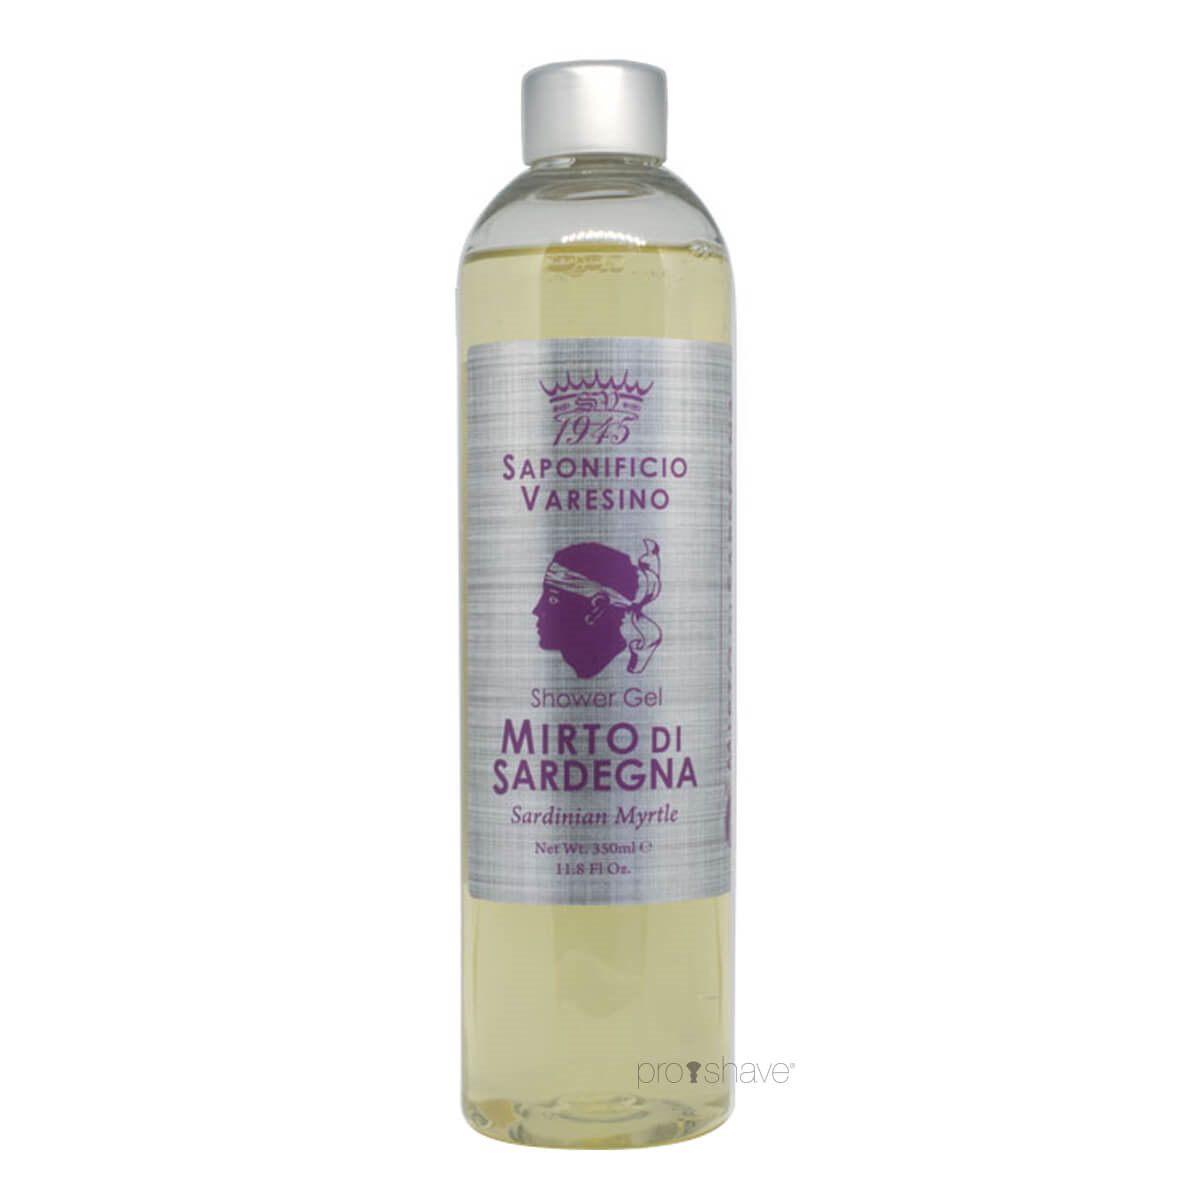 Se Saponificio Varesino Shower Gel, Mirto di Sardegna, 350 ml. hos Proshave